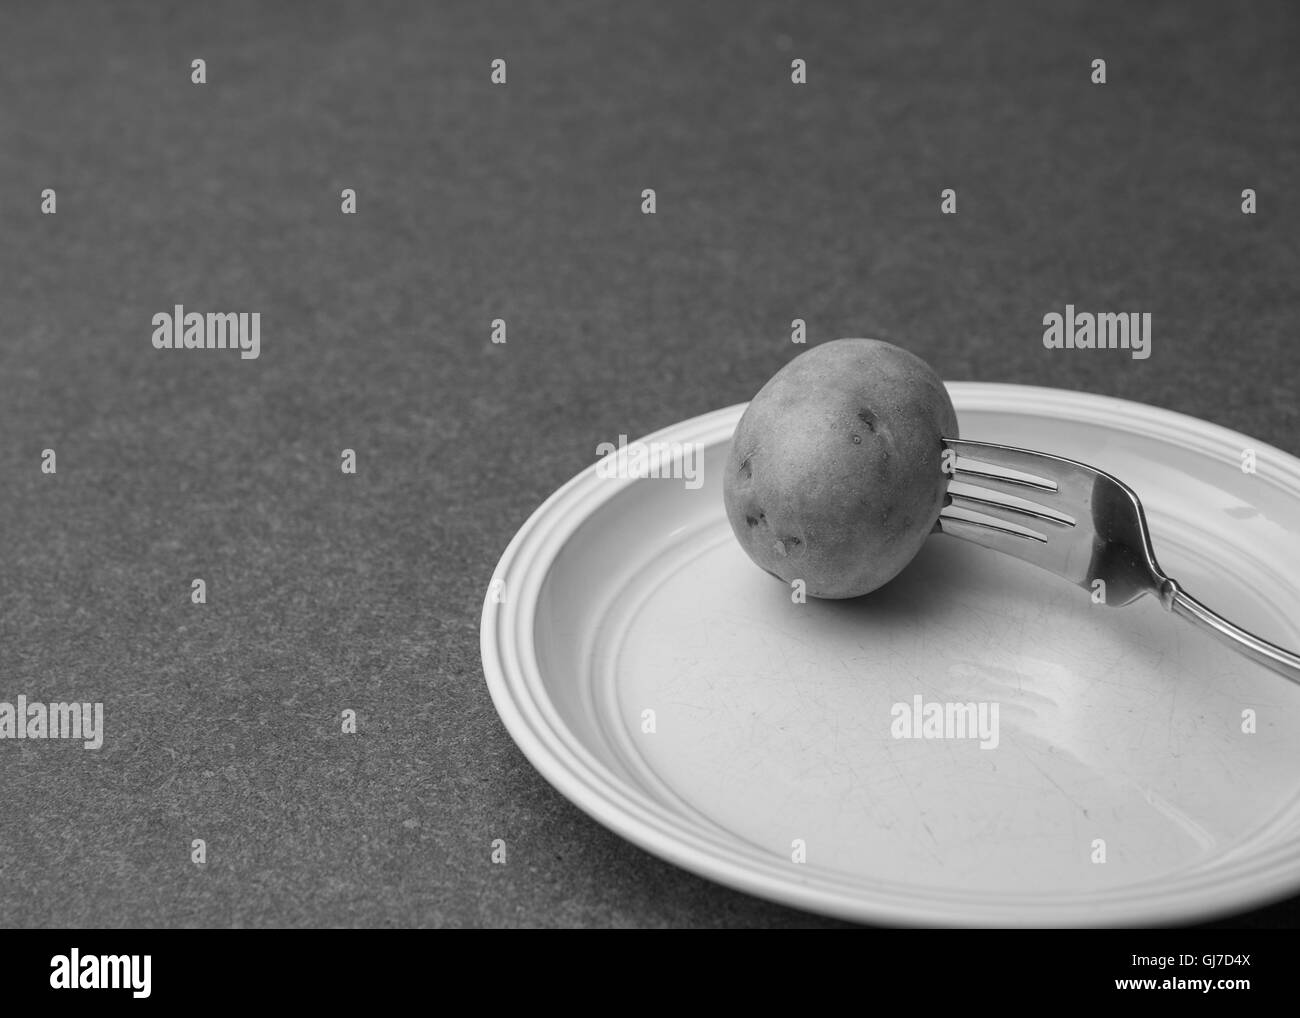 potato on the plate Stock Photo